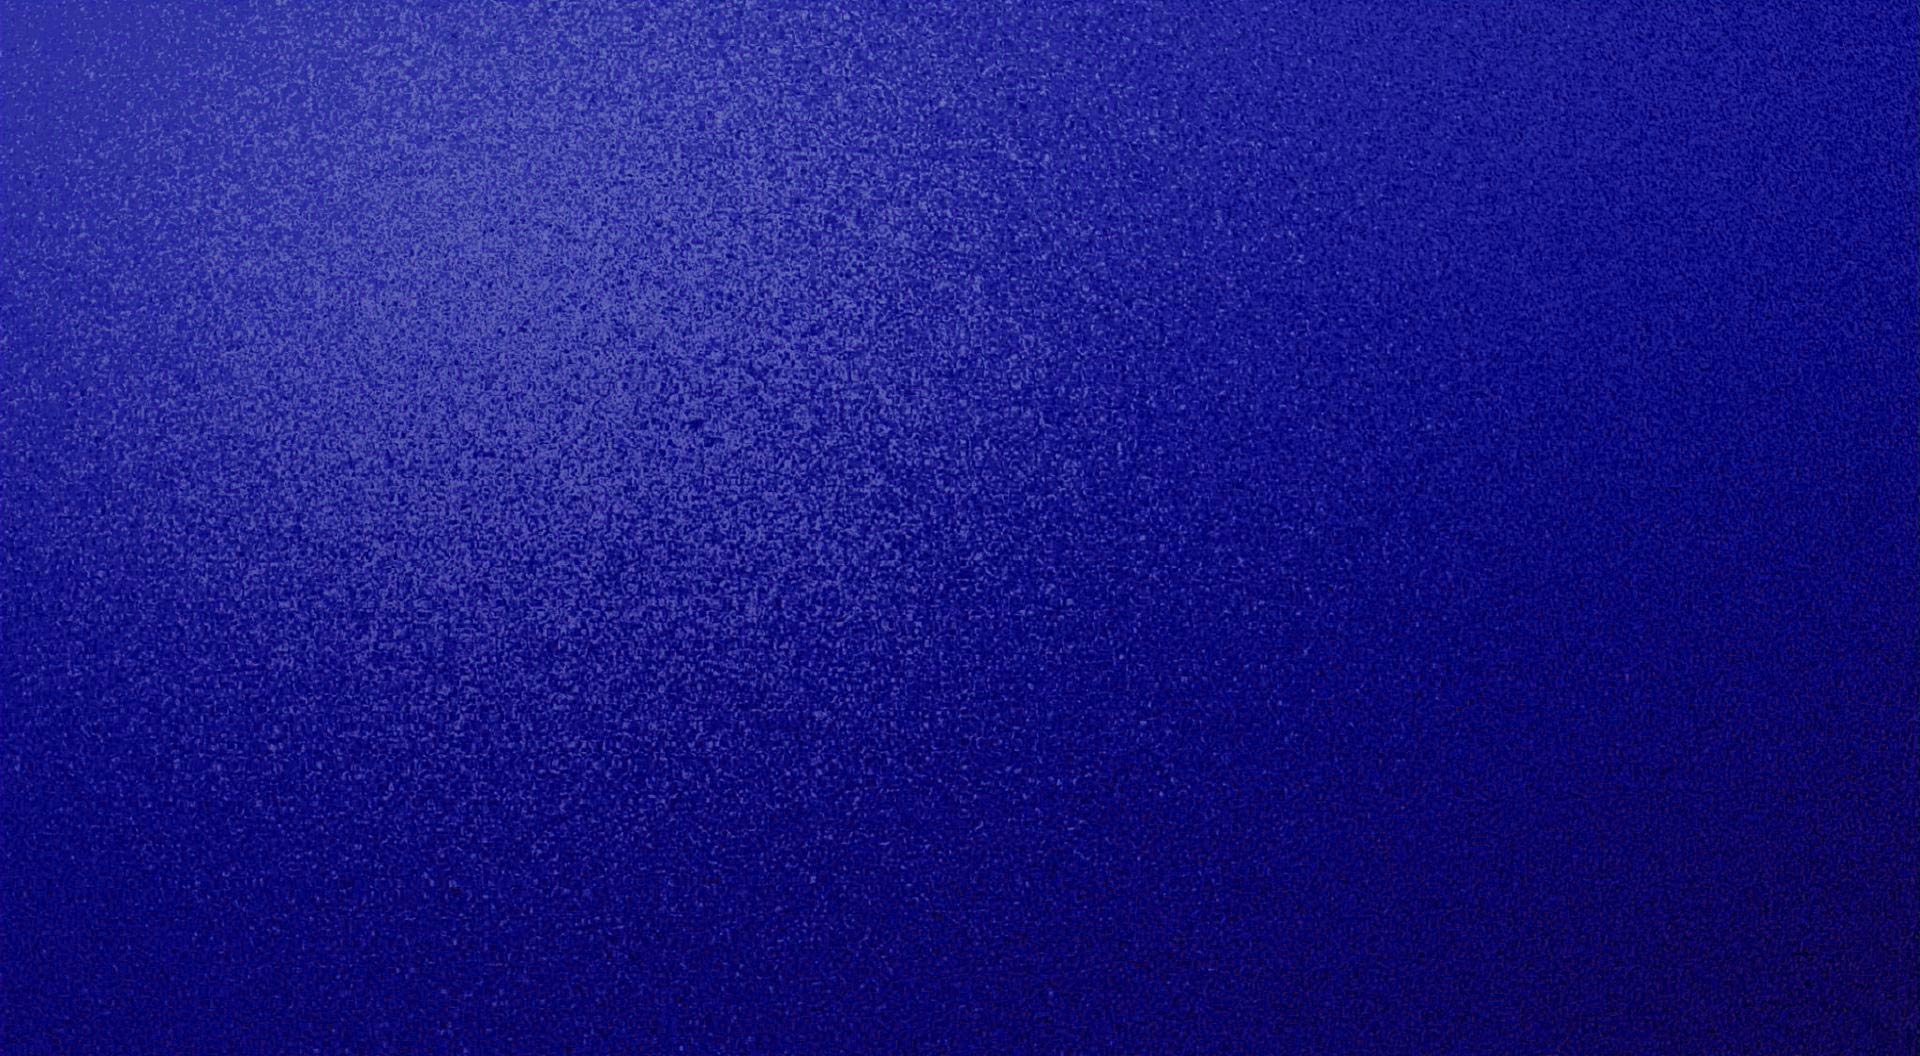 Wallpaper.wiki Dark Blue Texture Wallpaper PIC WPC009011. Wallpaper